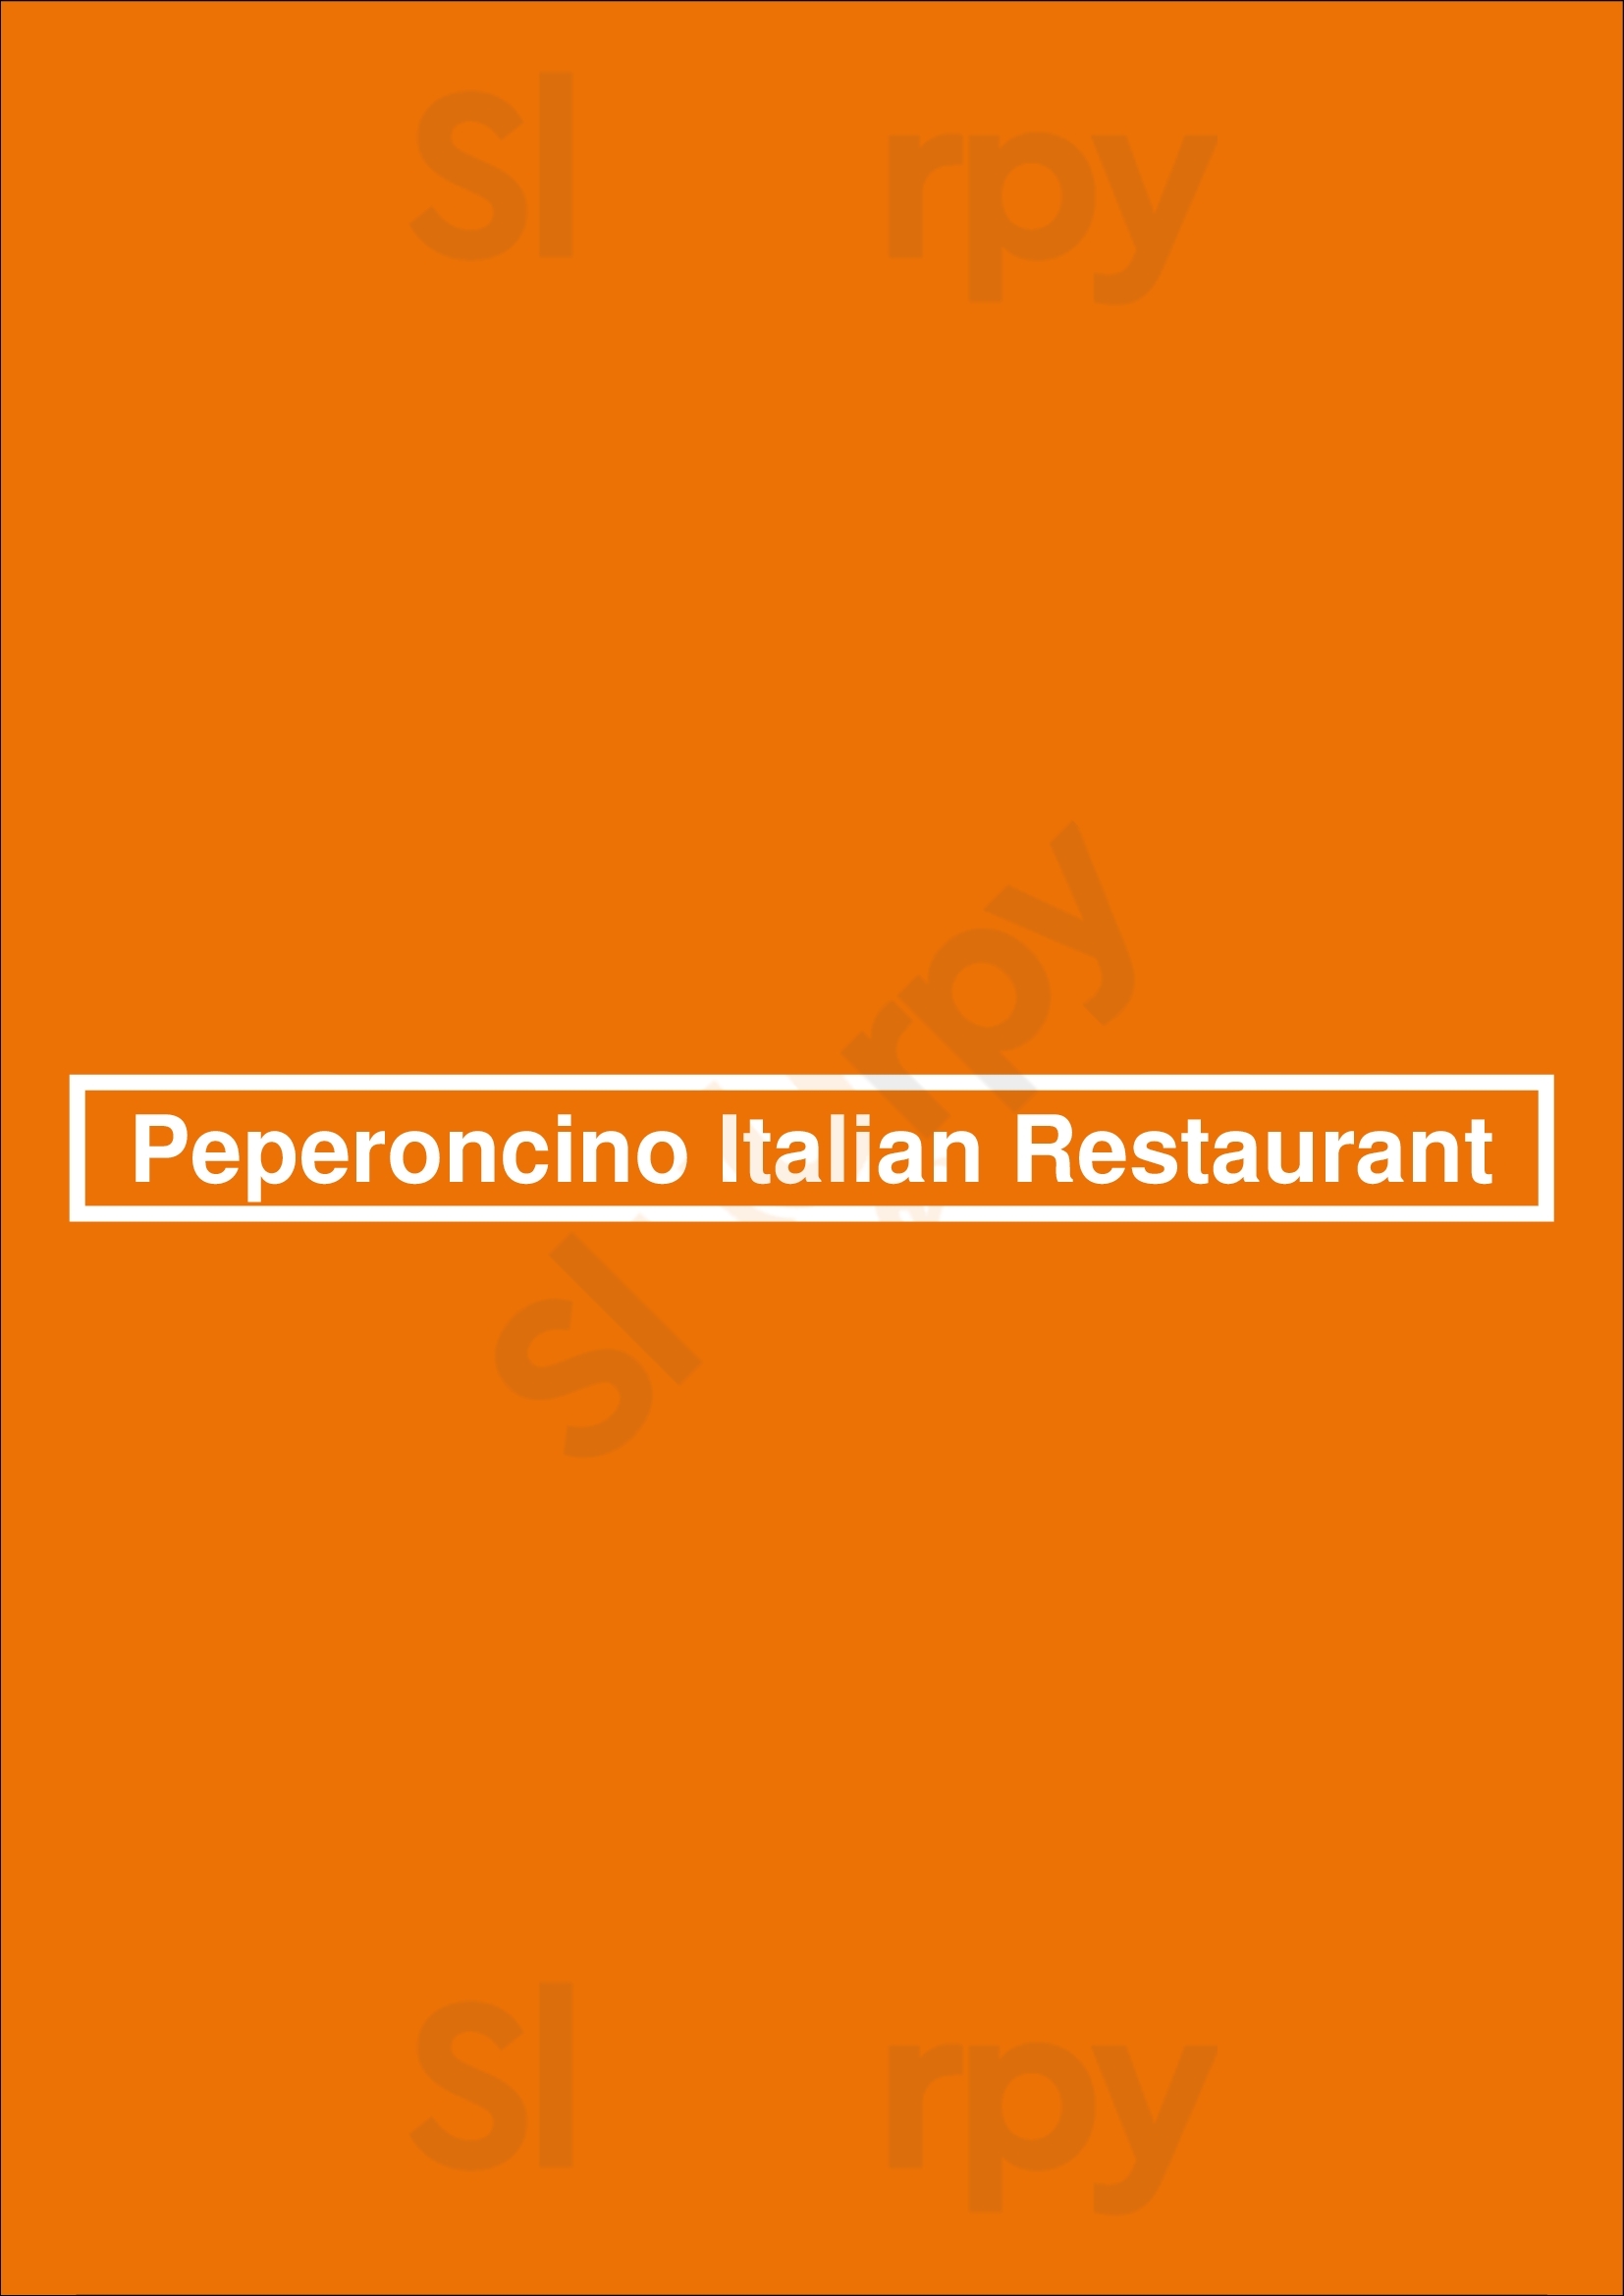 Peperoncino Italian Restaurant Leeds Menu - 1